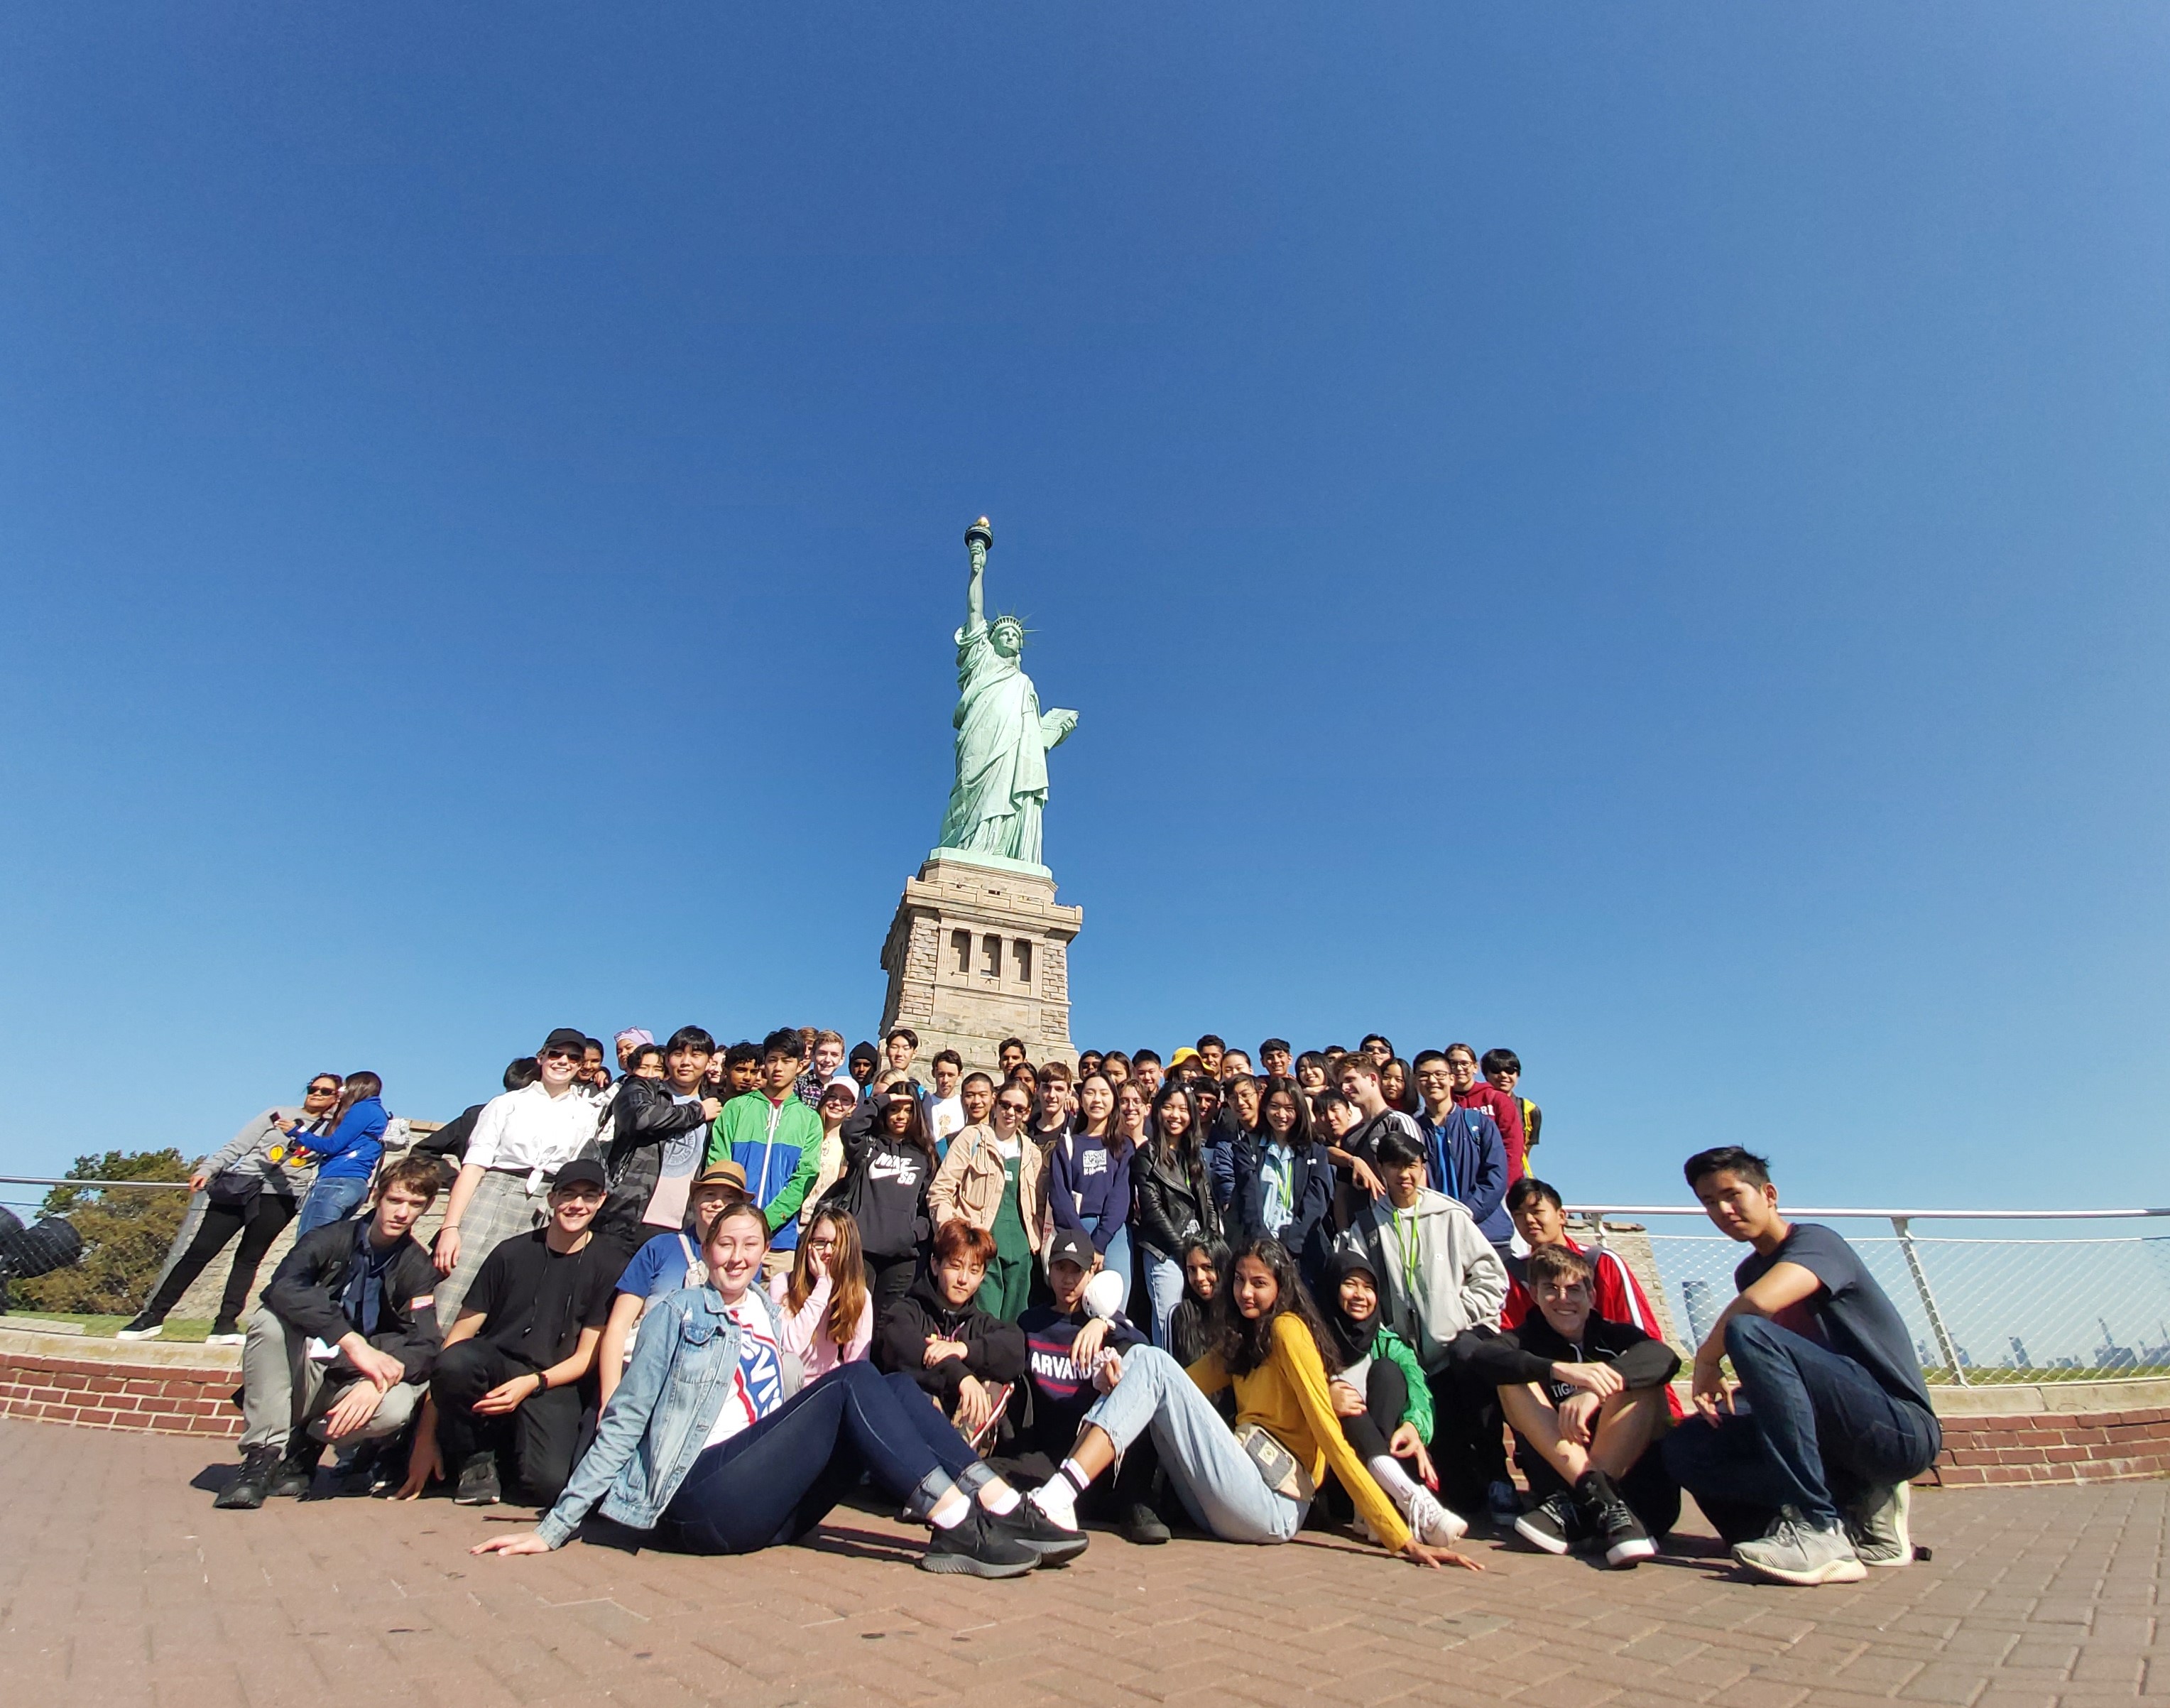 Statue of Liberty NYC.jpg